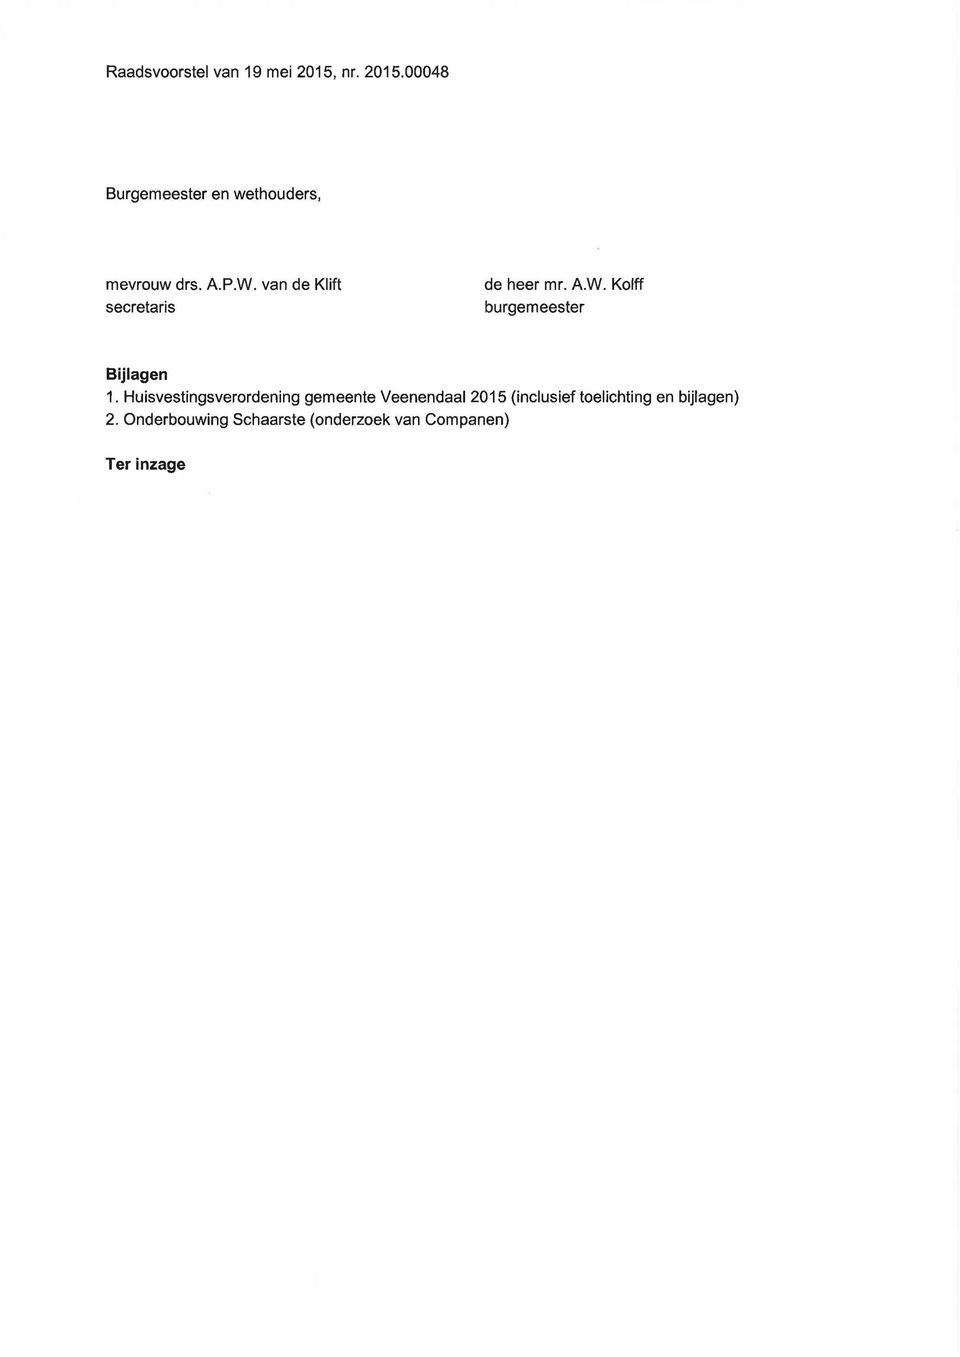 Huisvestingsverordening gemeente Veenendaal 2015 (inclusief toelichting en